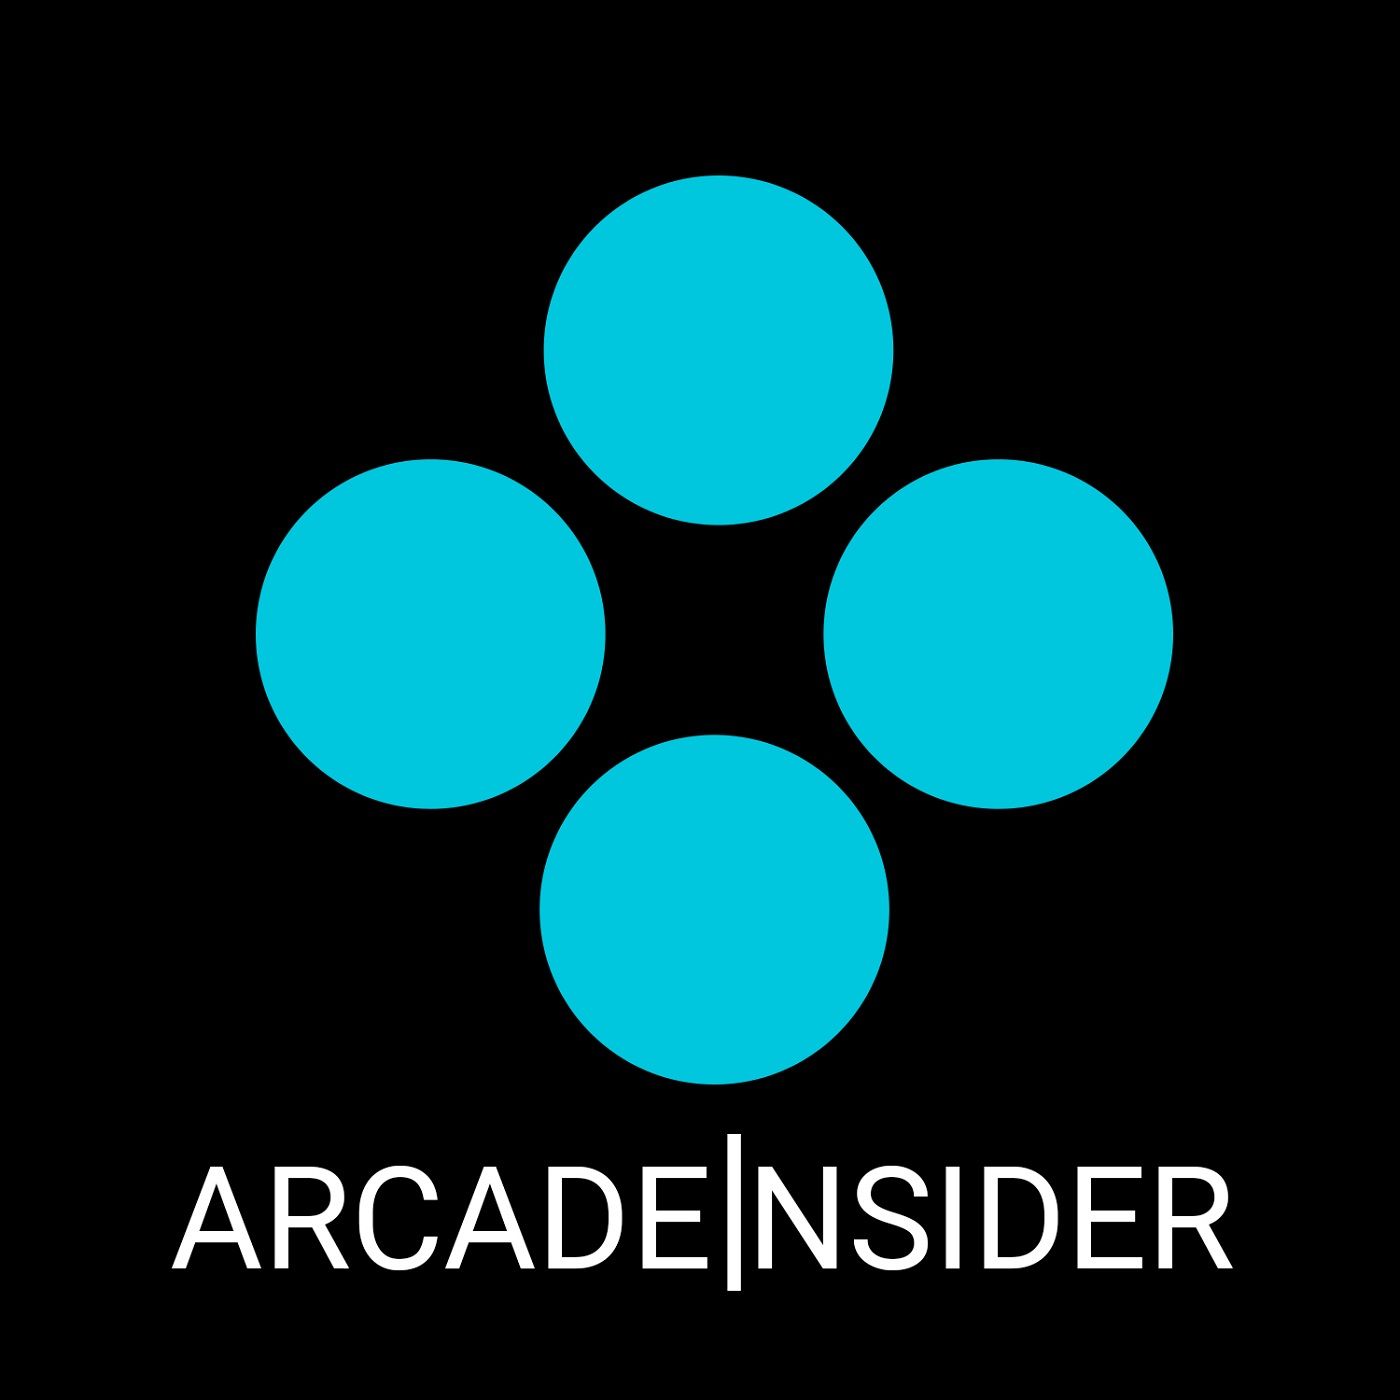 Arcade Insider